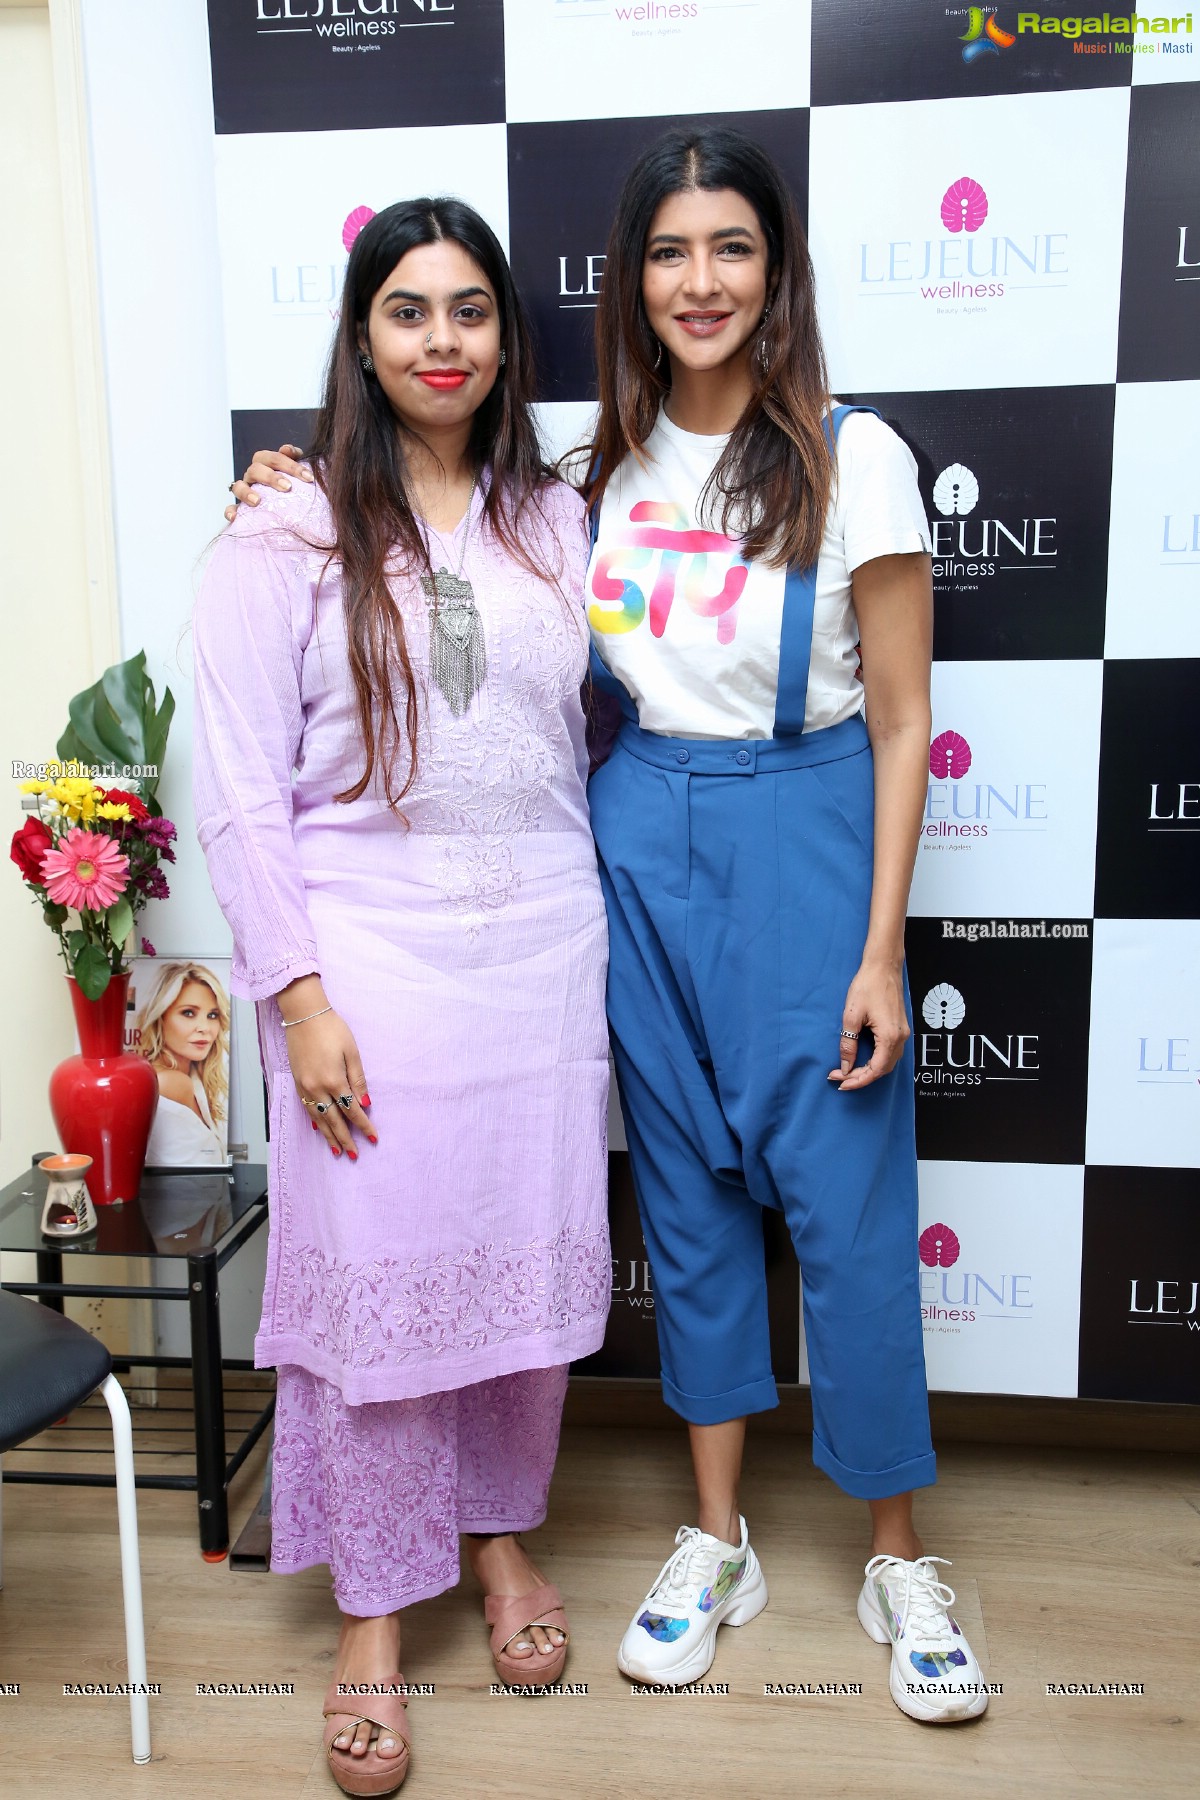 Lejeune Wellness Launch with Lakshmi Manchu